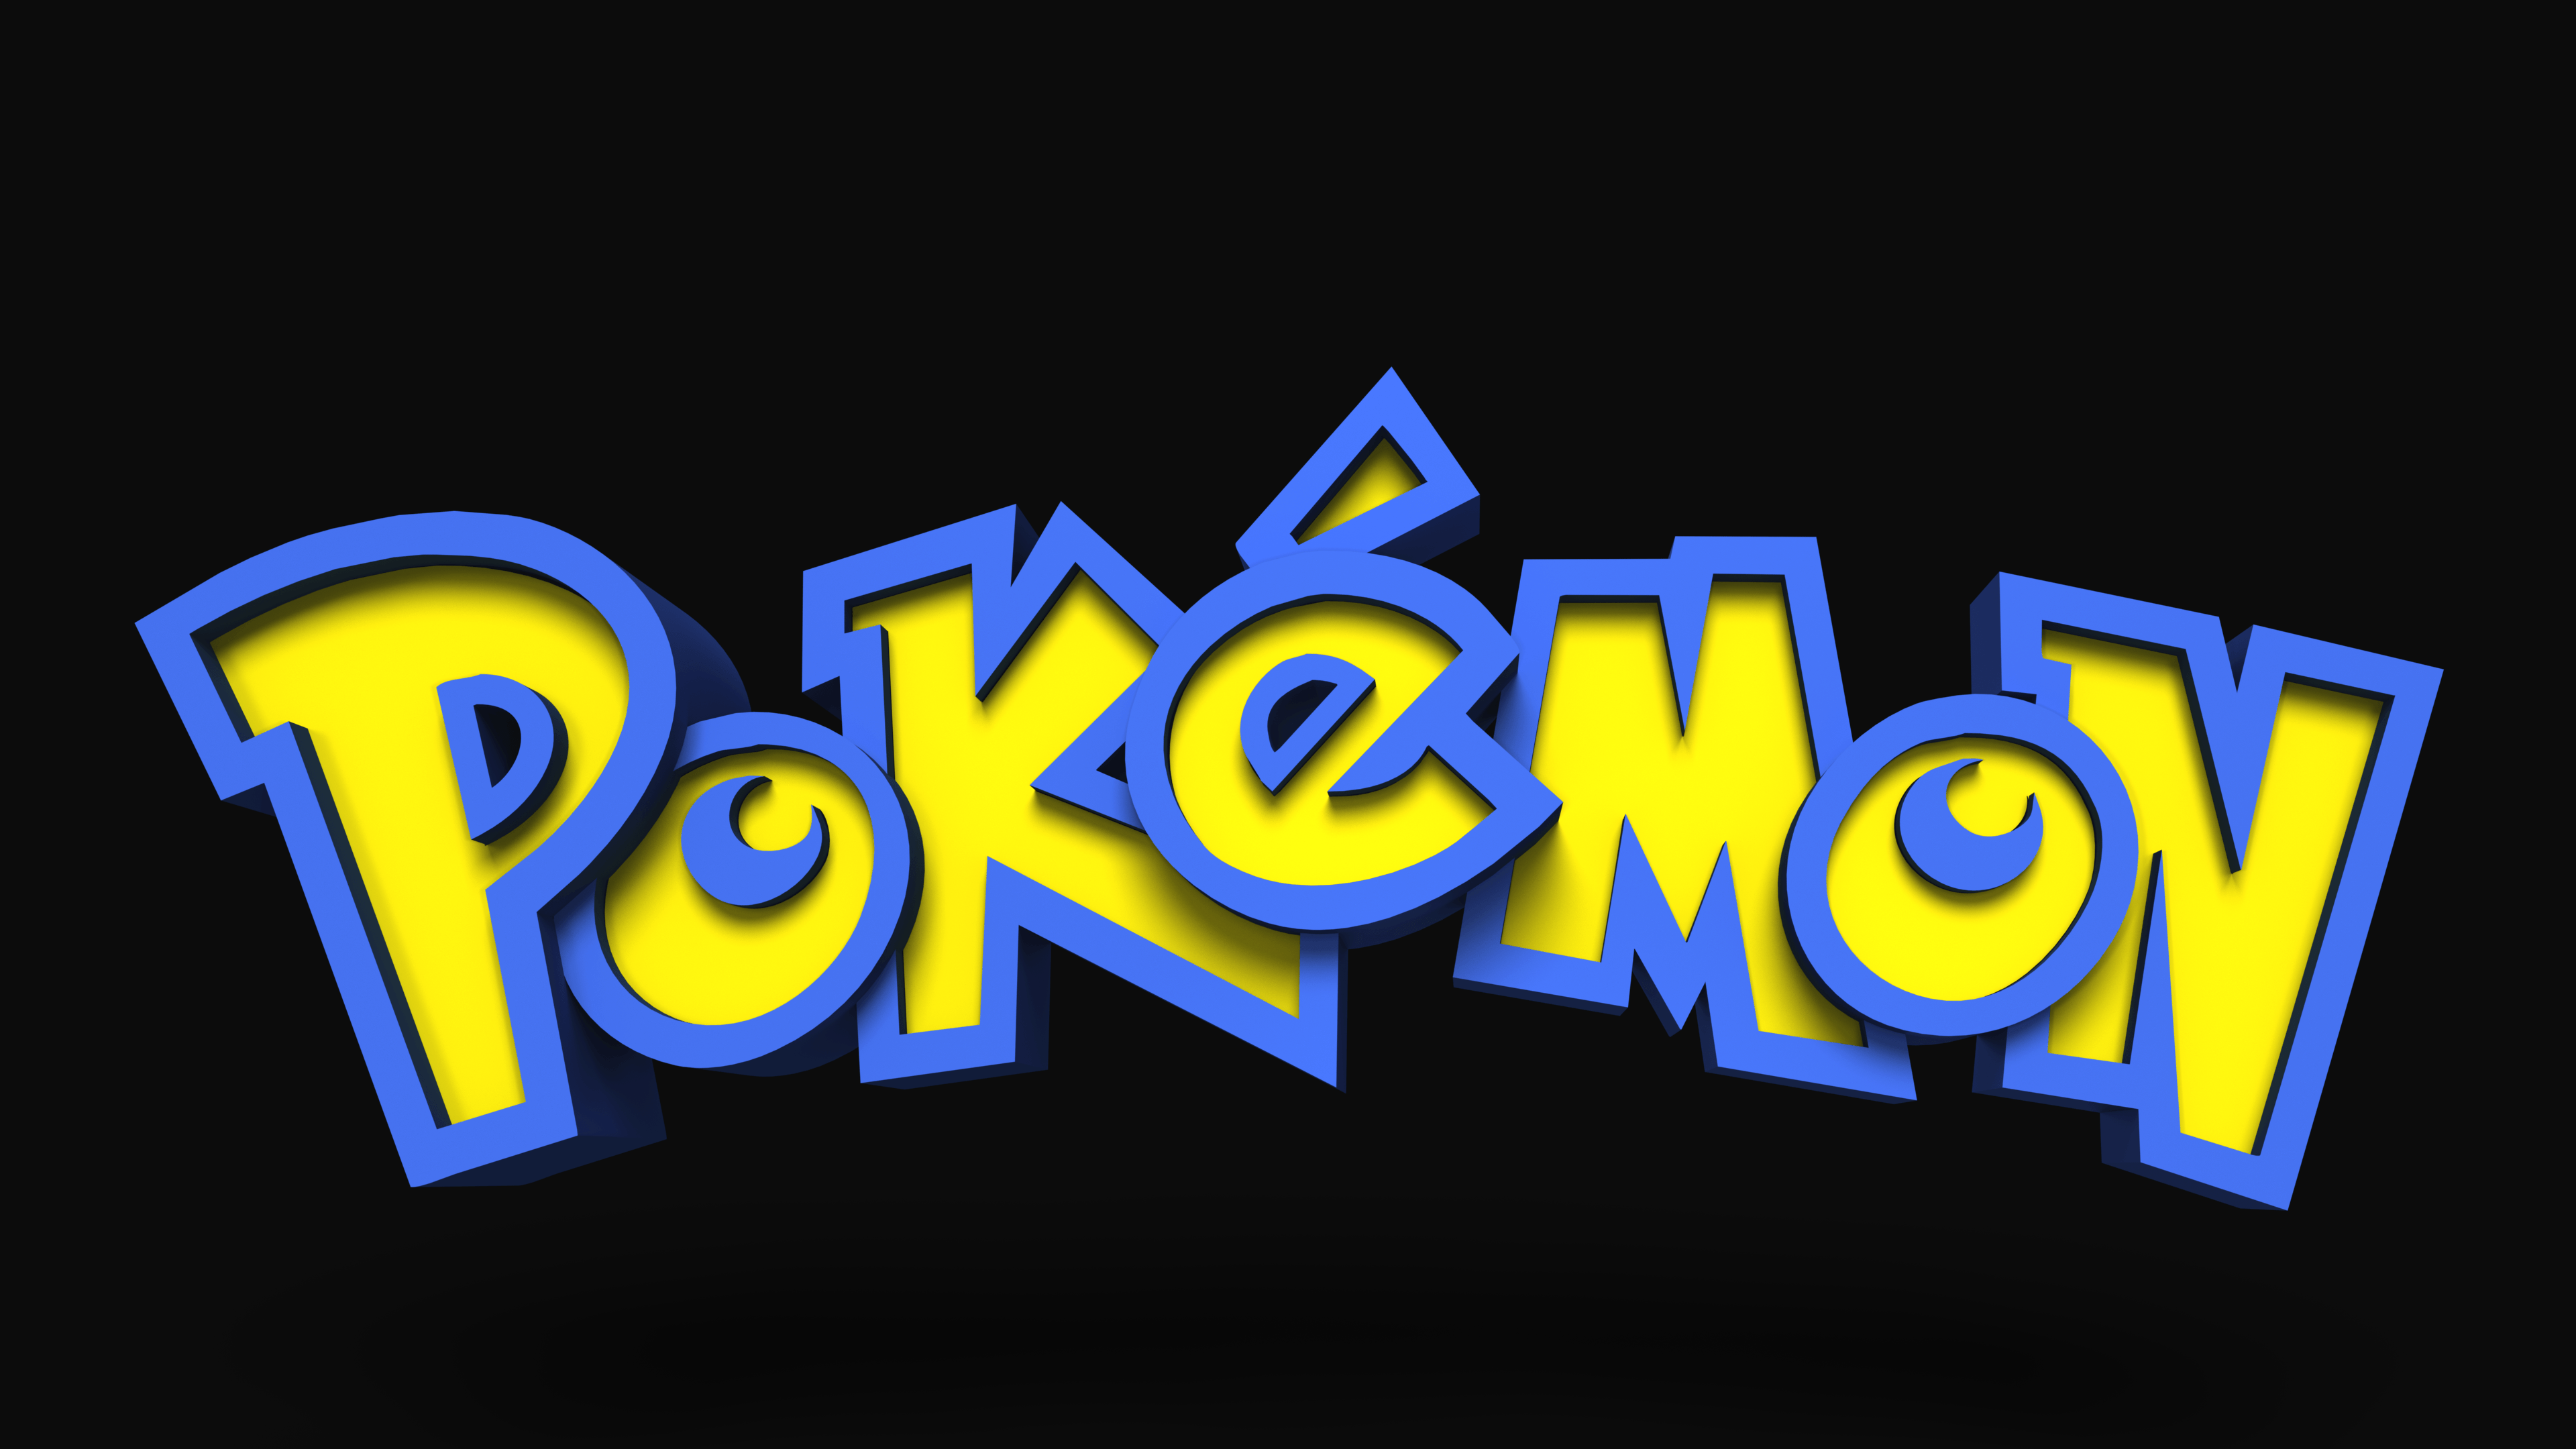 Pokeman Logo - OC] I rendered the Pokemon logo in 3D using only Photoshop. - Imgur